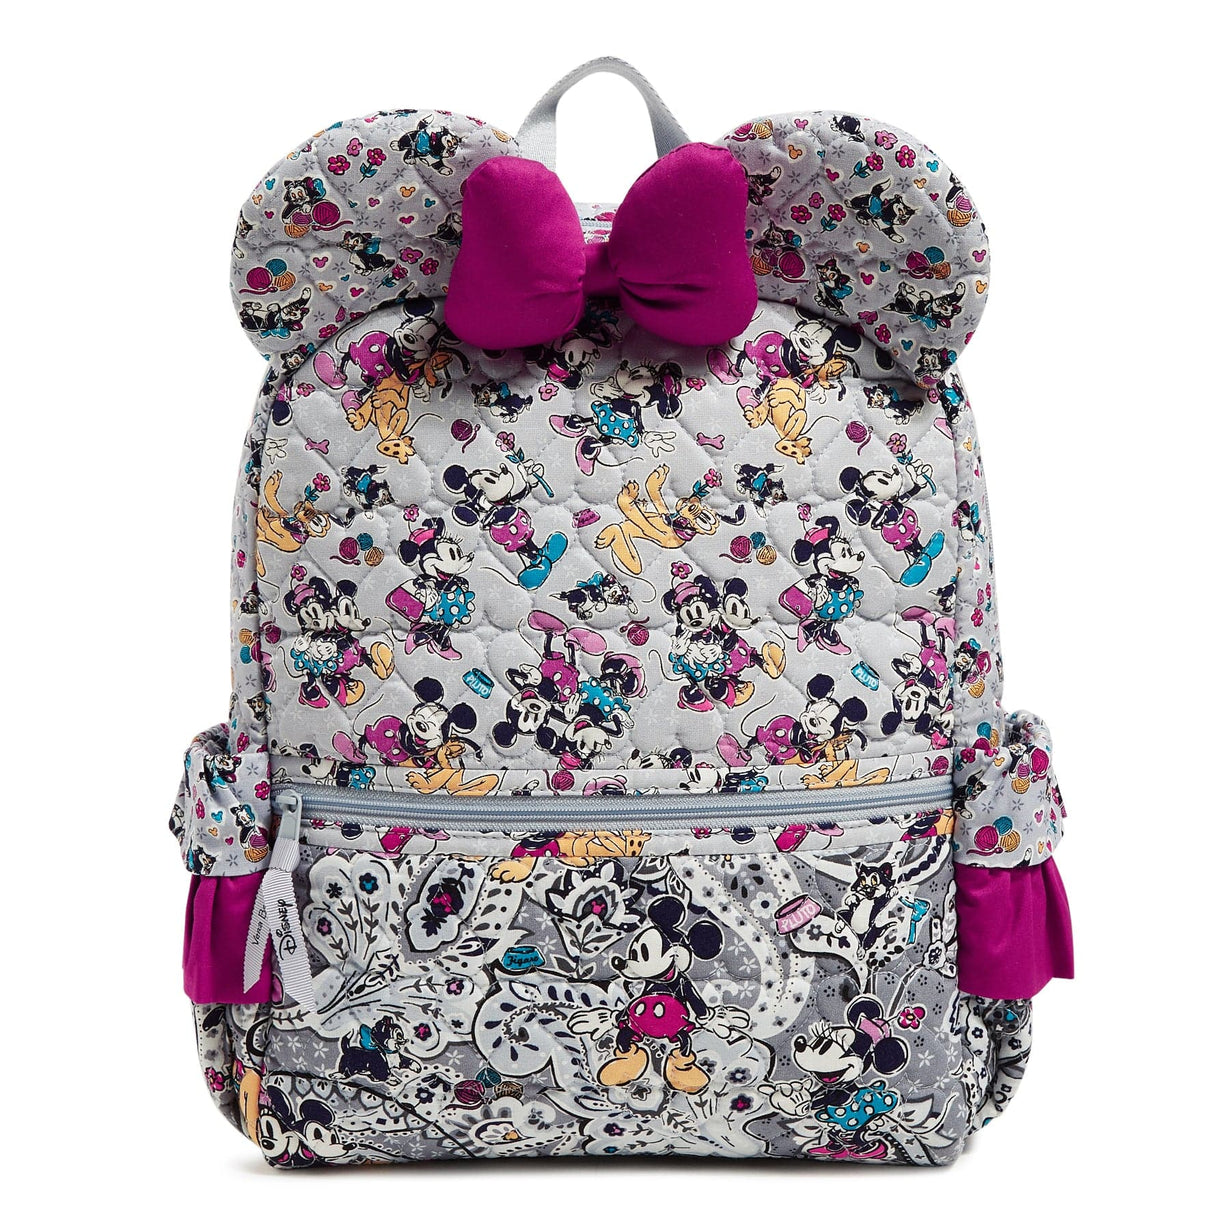 Disney Minnie Mouse Backpacks